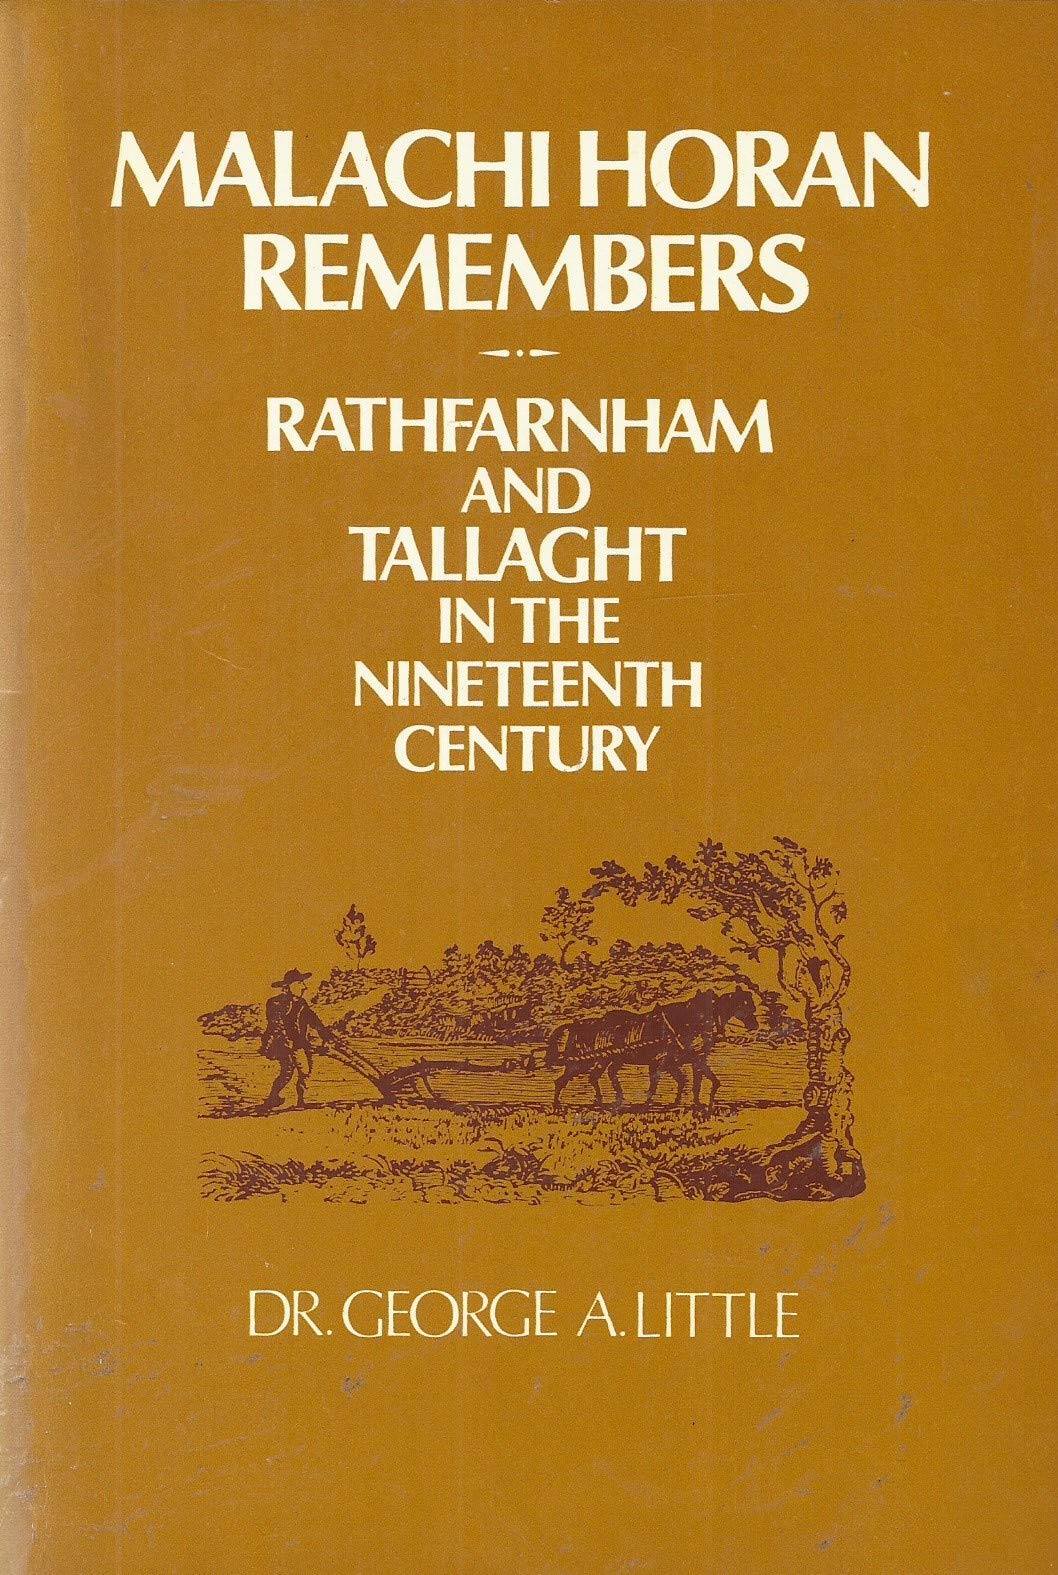 Malachi Horan Remembers: Rathfarnham and Tallaght in the Nineteenth Century